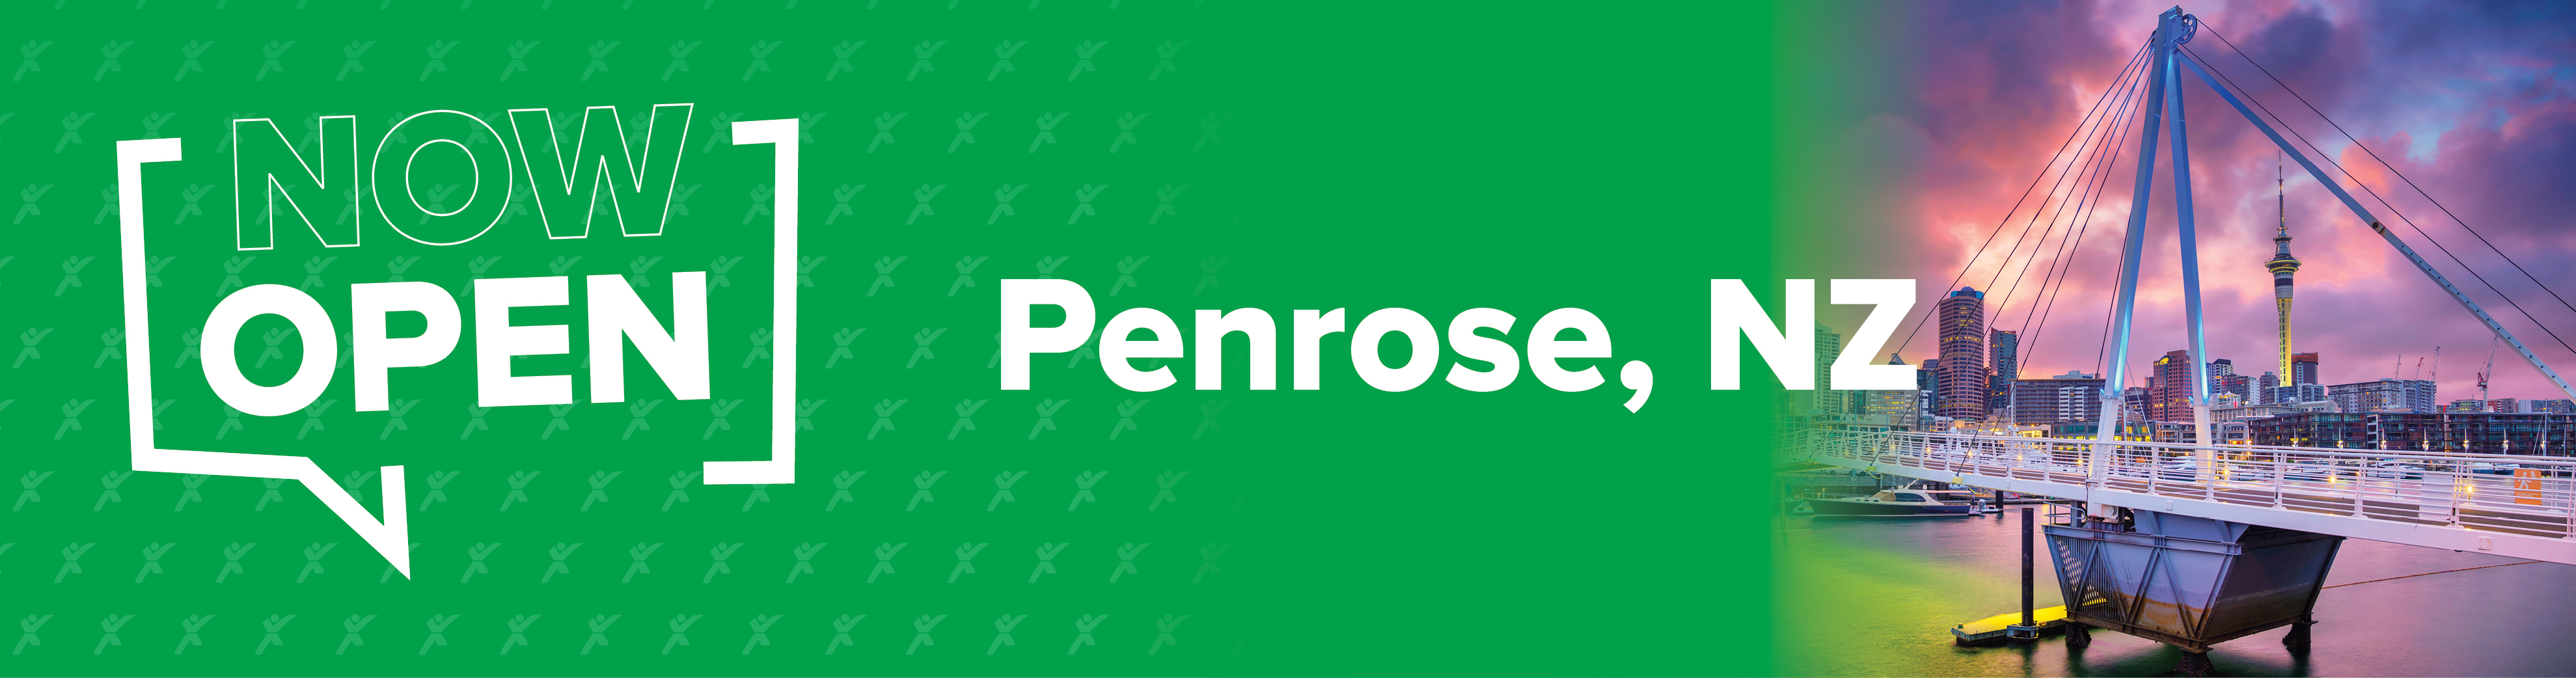 Penrose now open